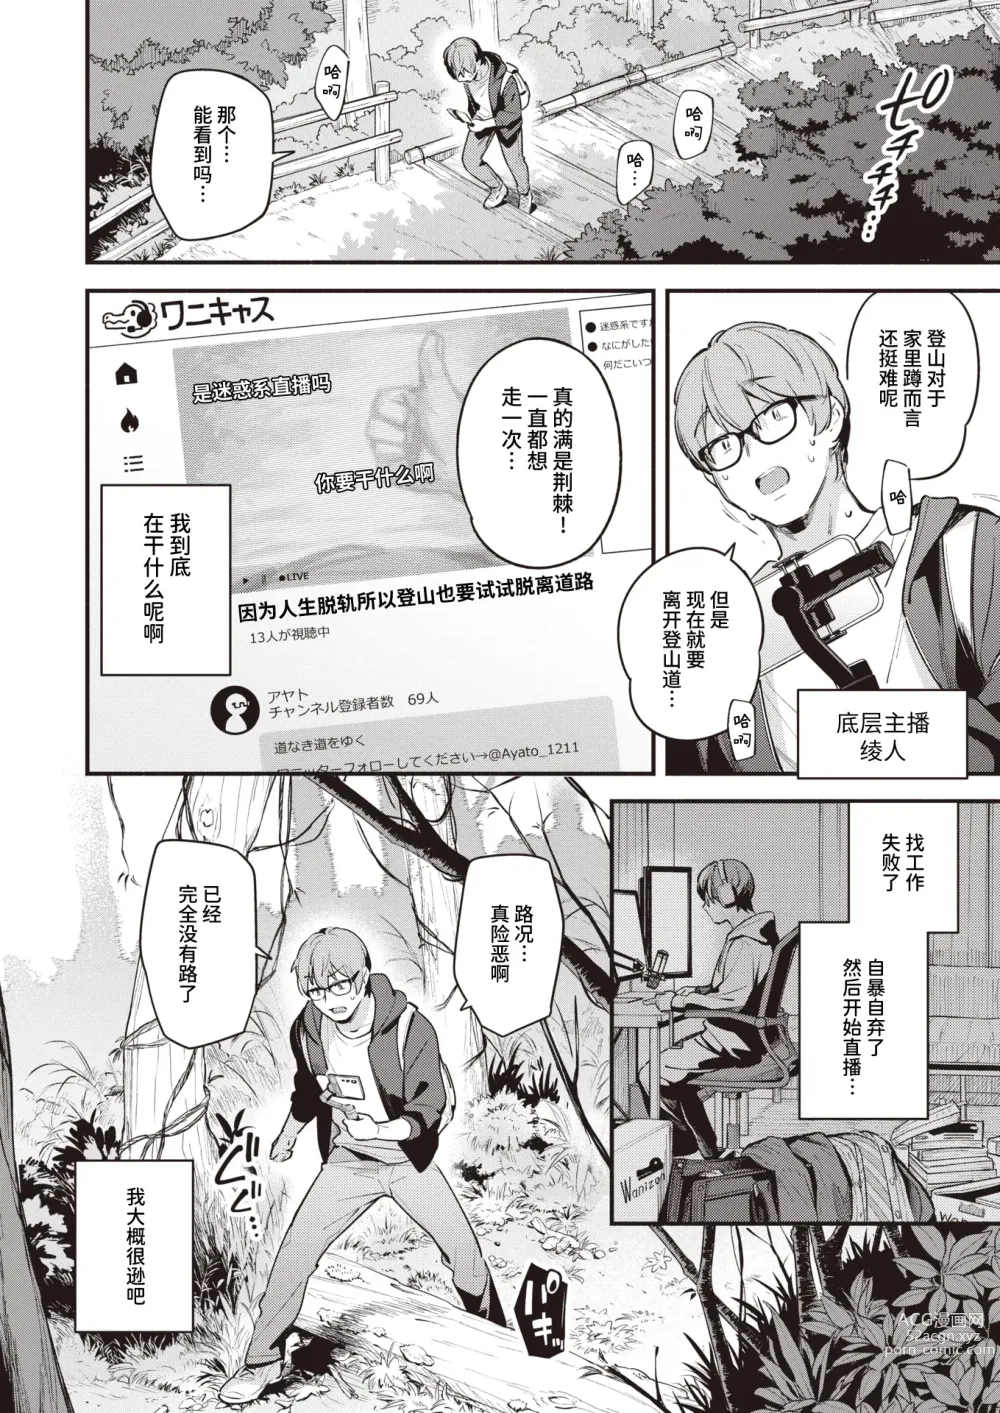 Page 3 of manga Hitou